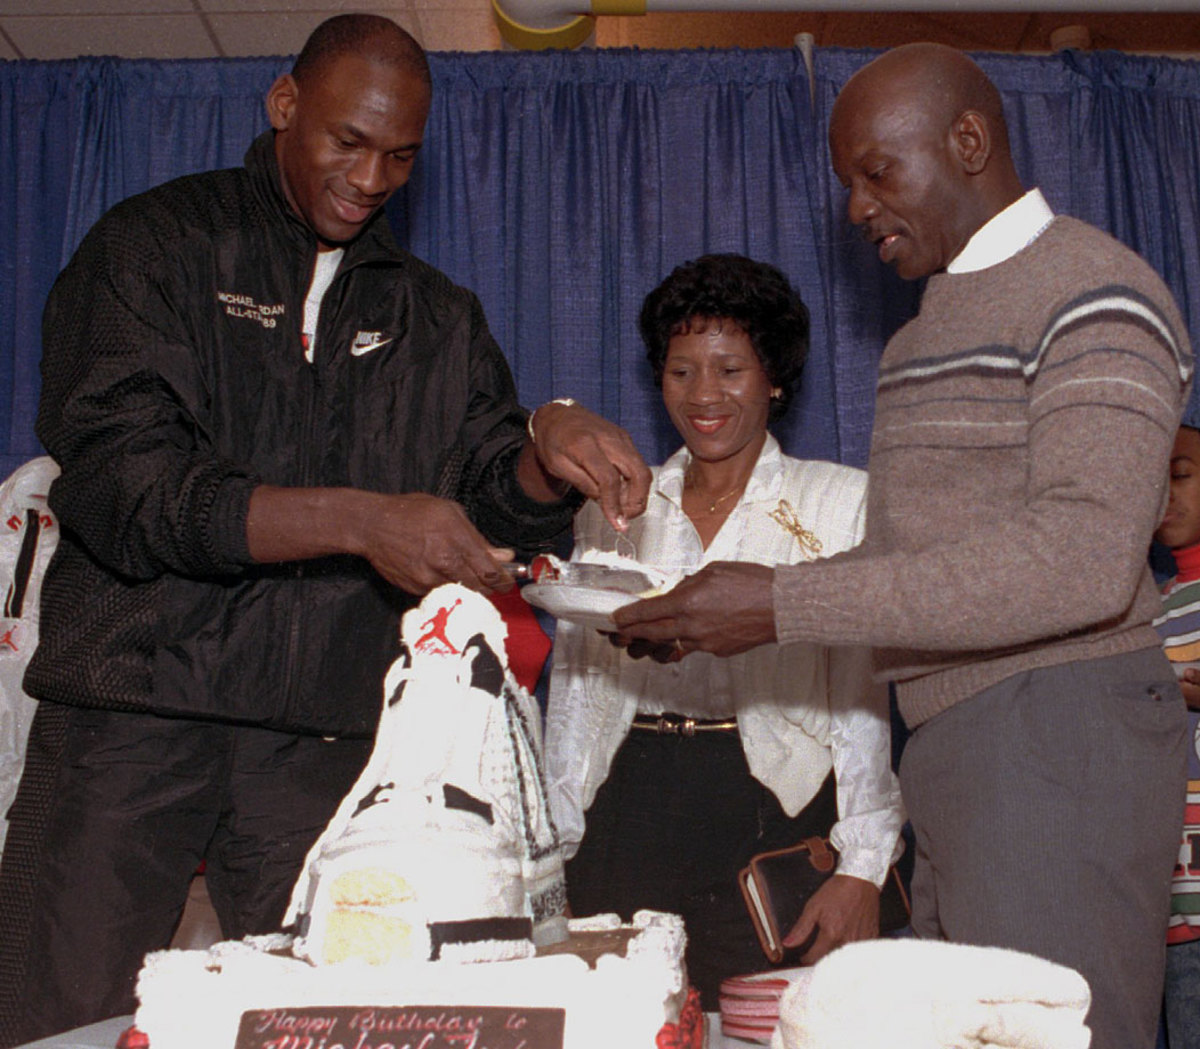 Michael-Jordan-birthday-cake.jpg